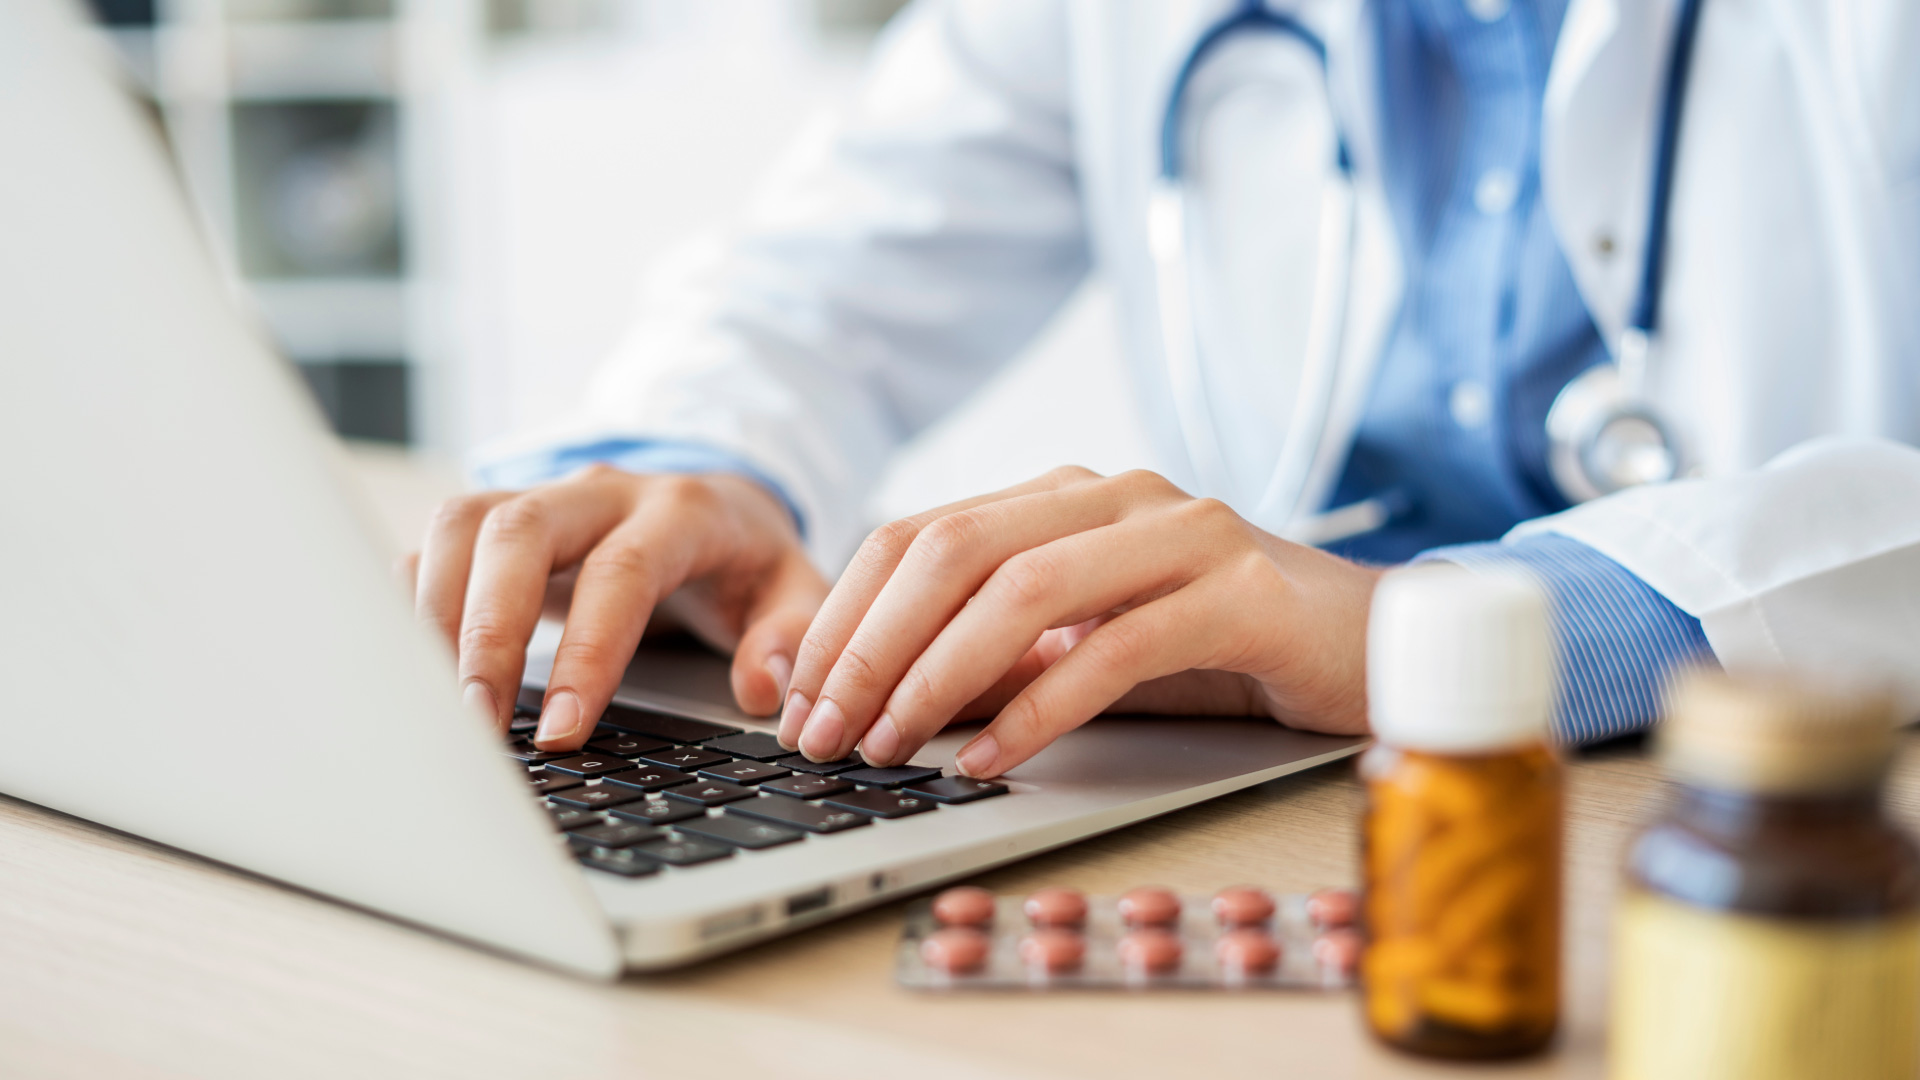 Physician prescribing medication on laptop EHR